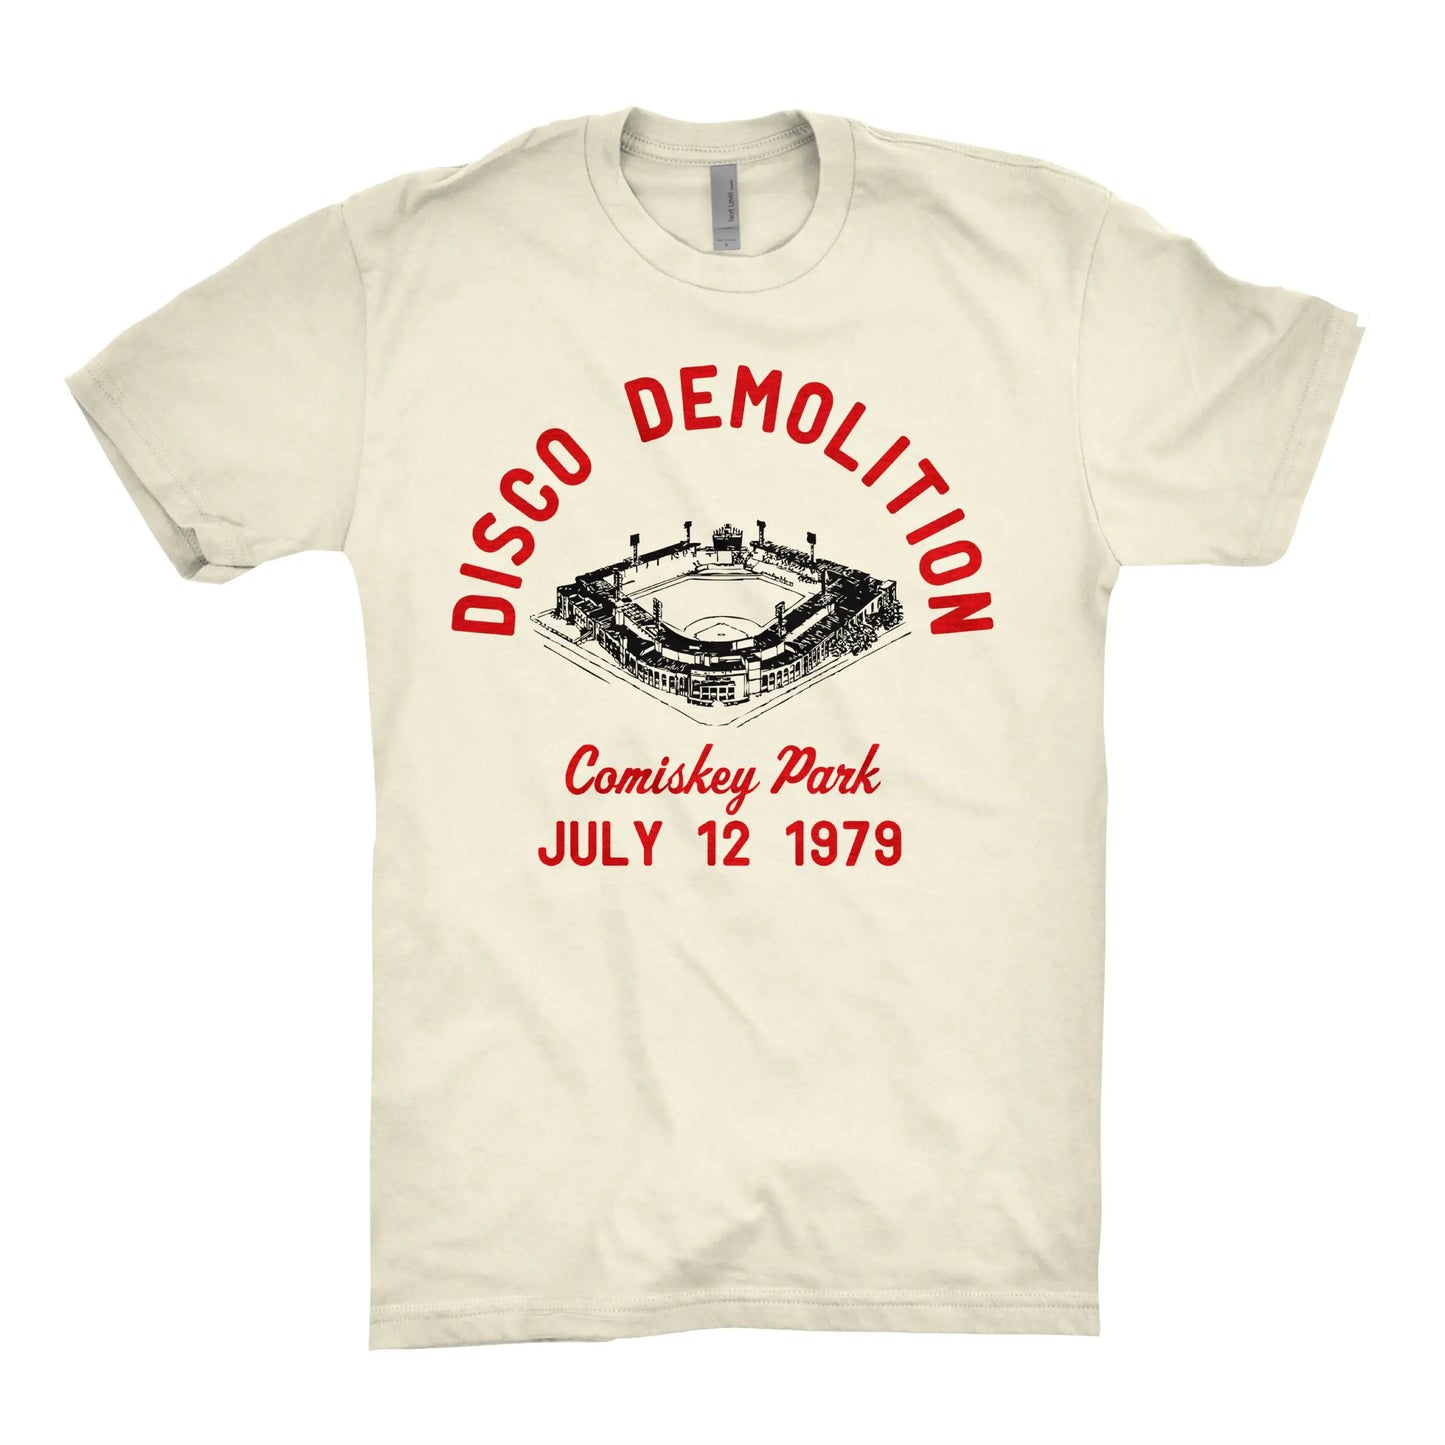 Chitown Clothing Disco Demolition Shirt